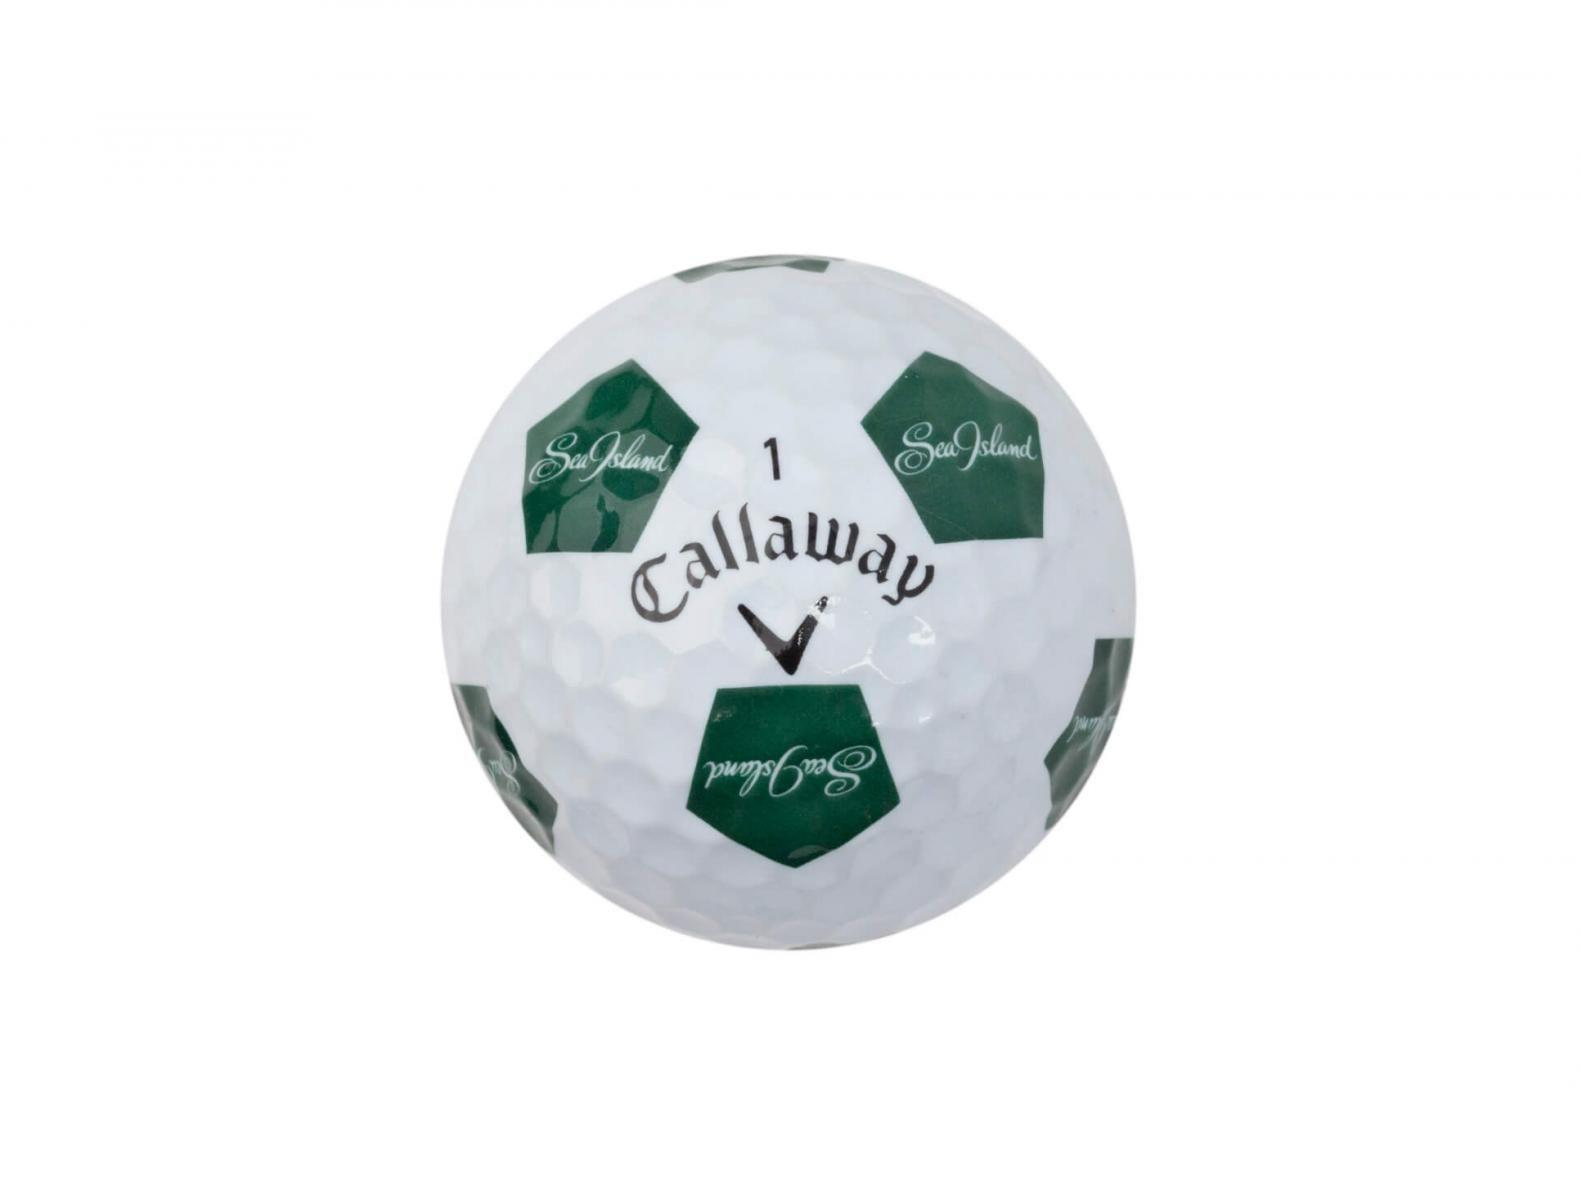 Calloway Logo - Sea Island Callaway Logo Ball | Sea Island Shop